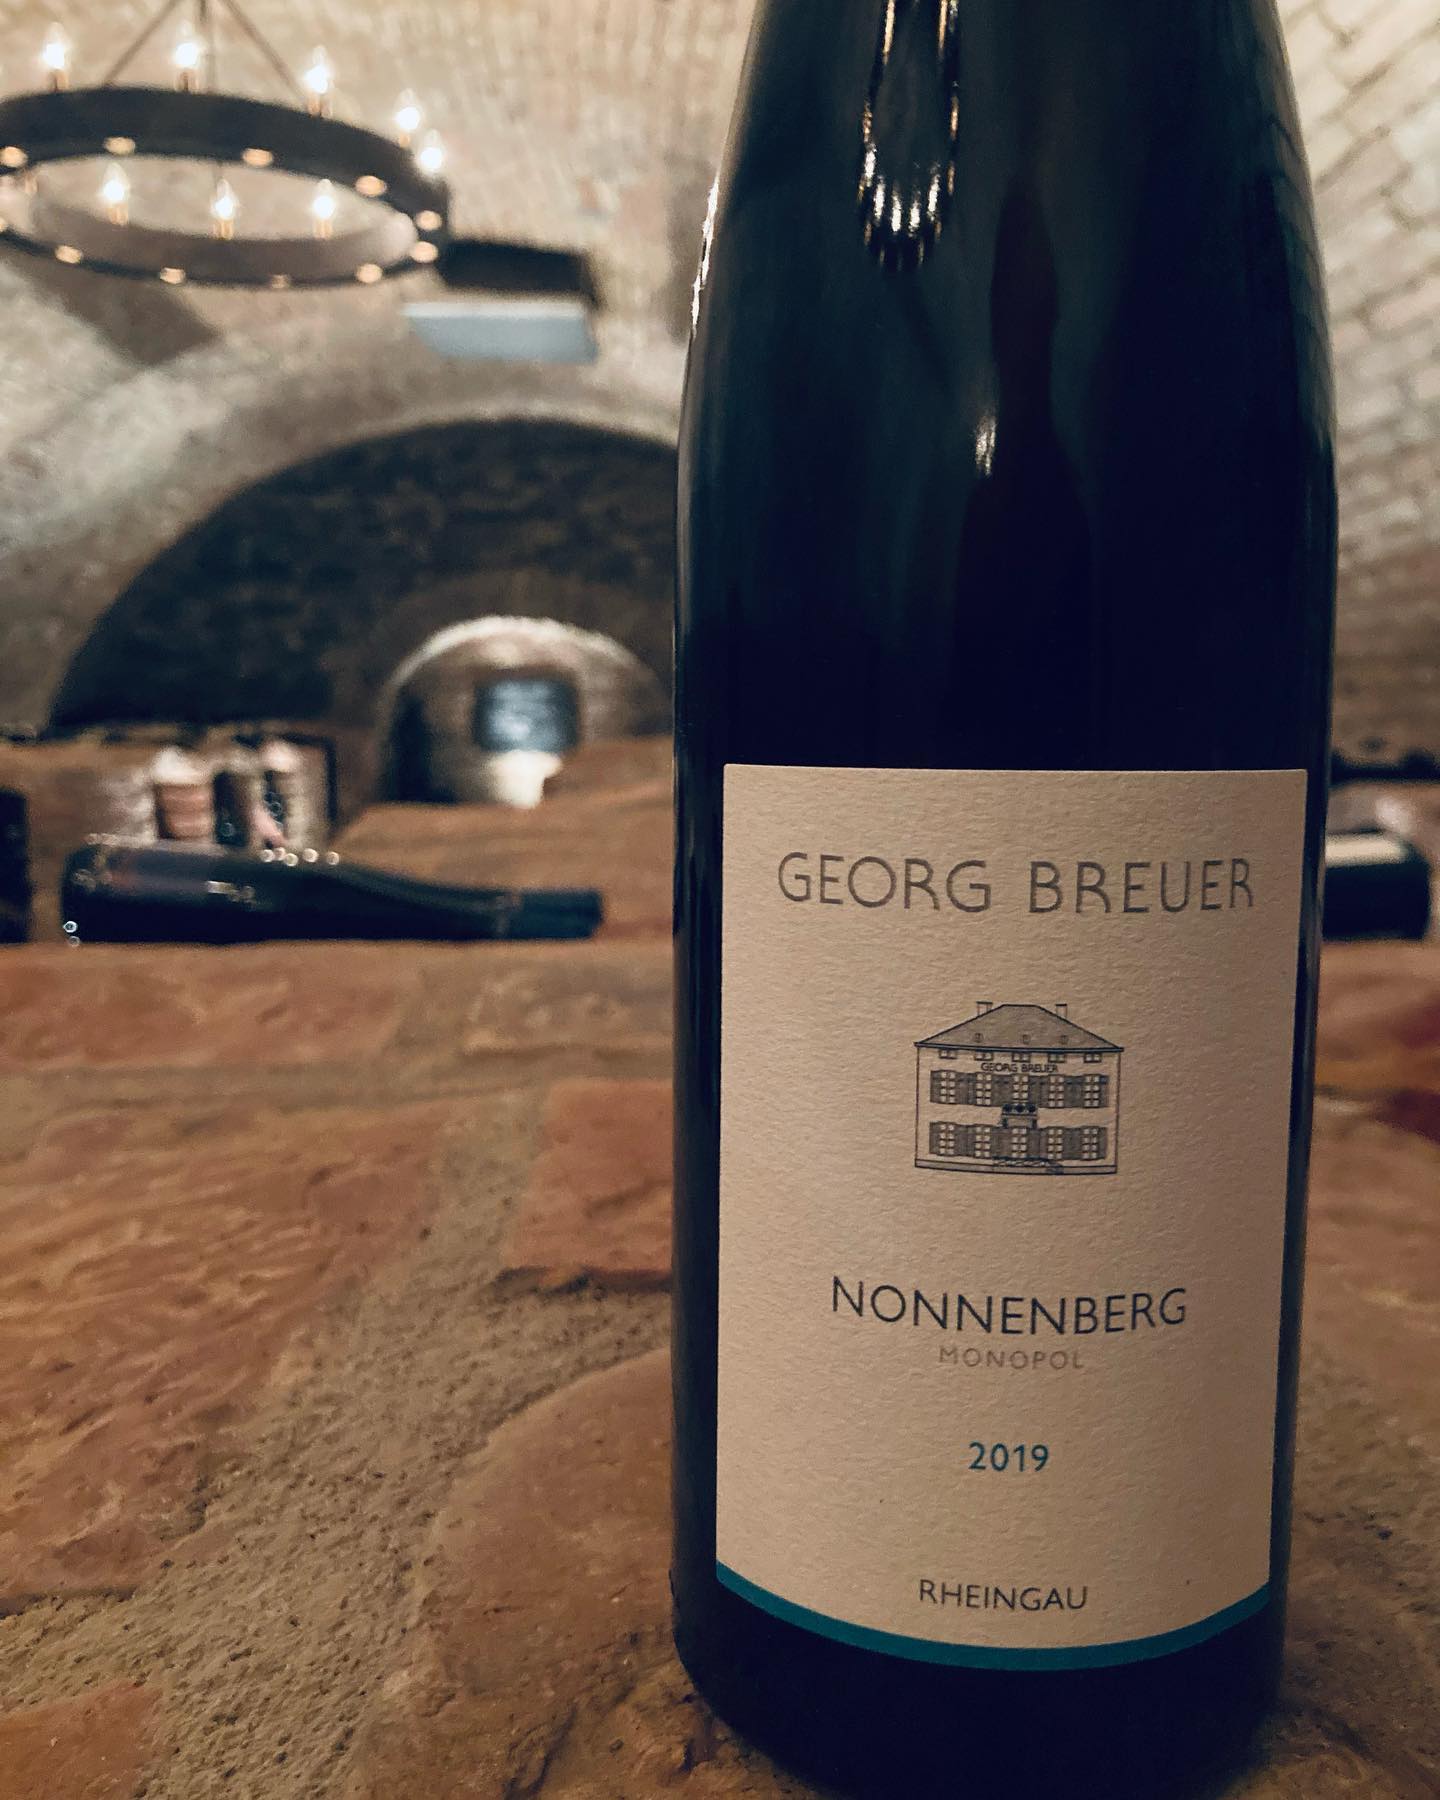 Georg Breuer Riesling Nonnenberg Monopollage 2019